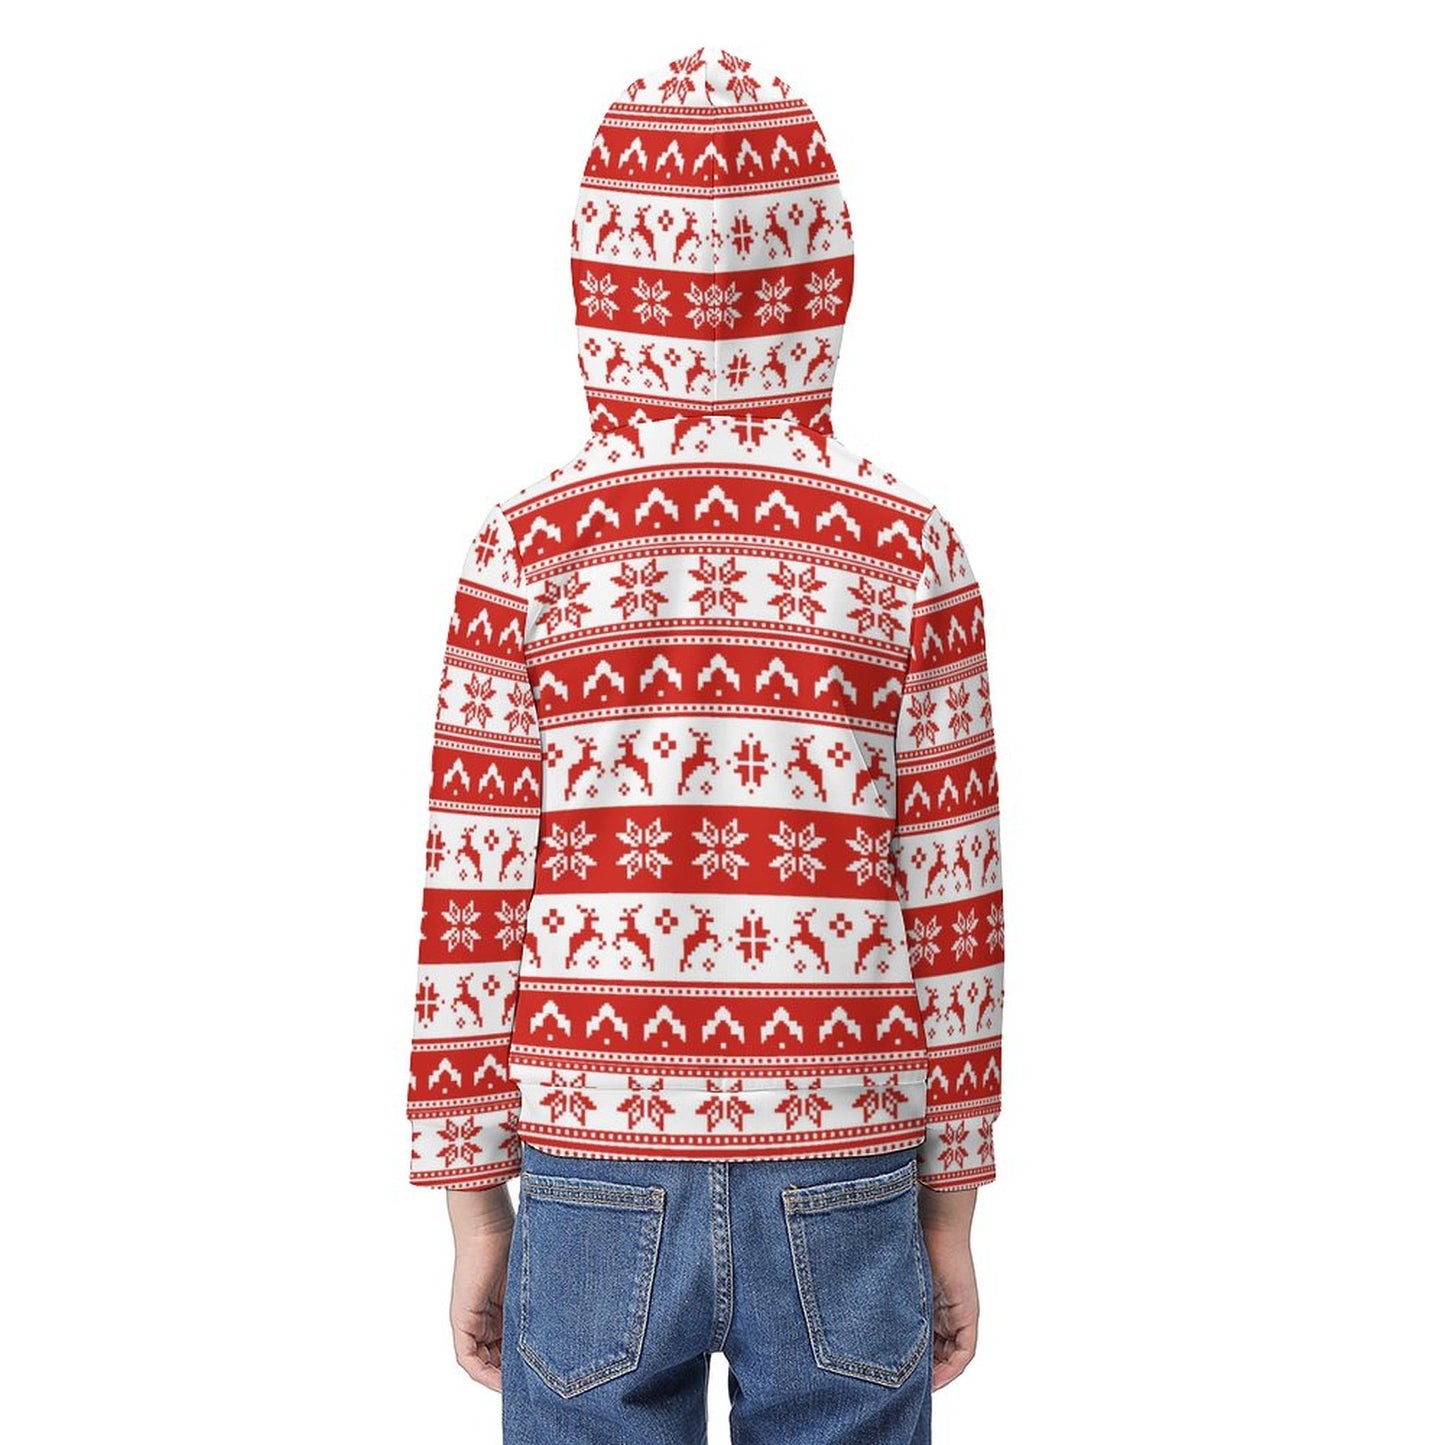 Online DIY Hoodie for Kids Christmas Pattern Red White Pixel